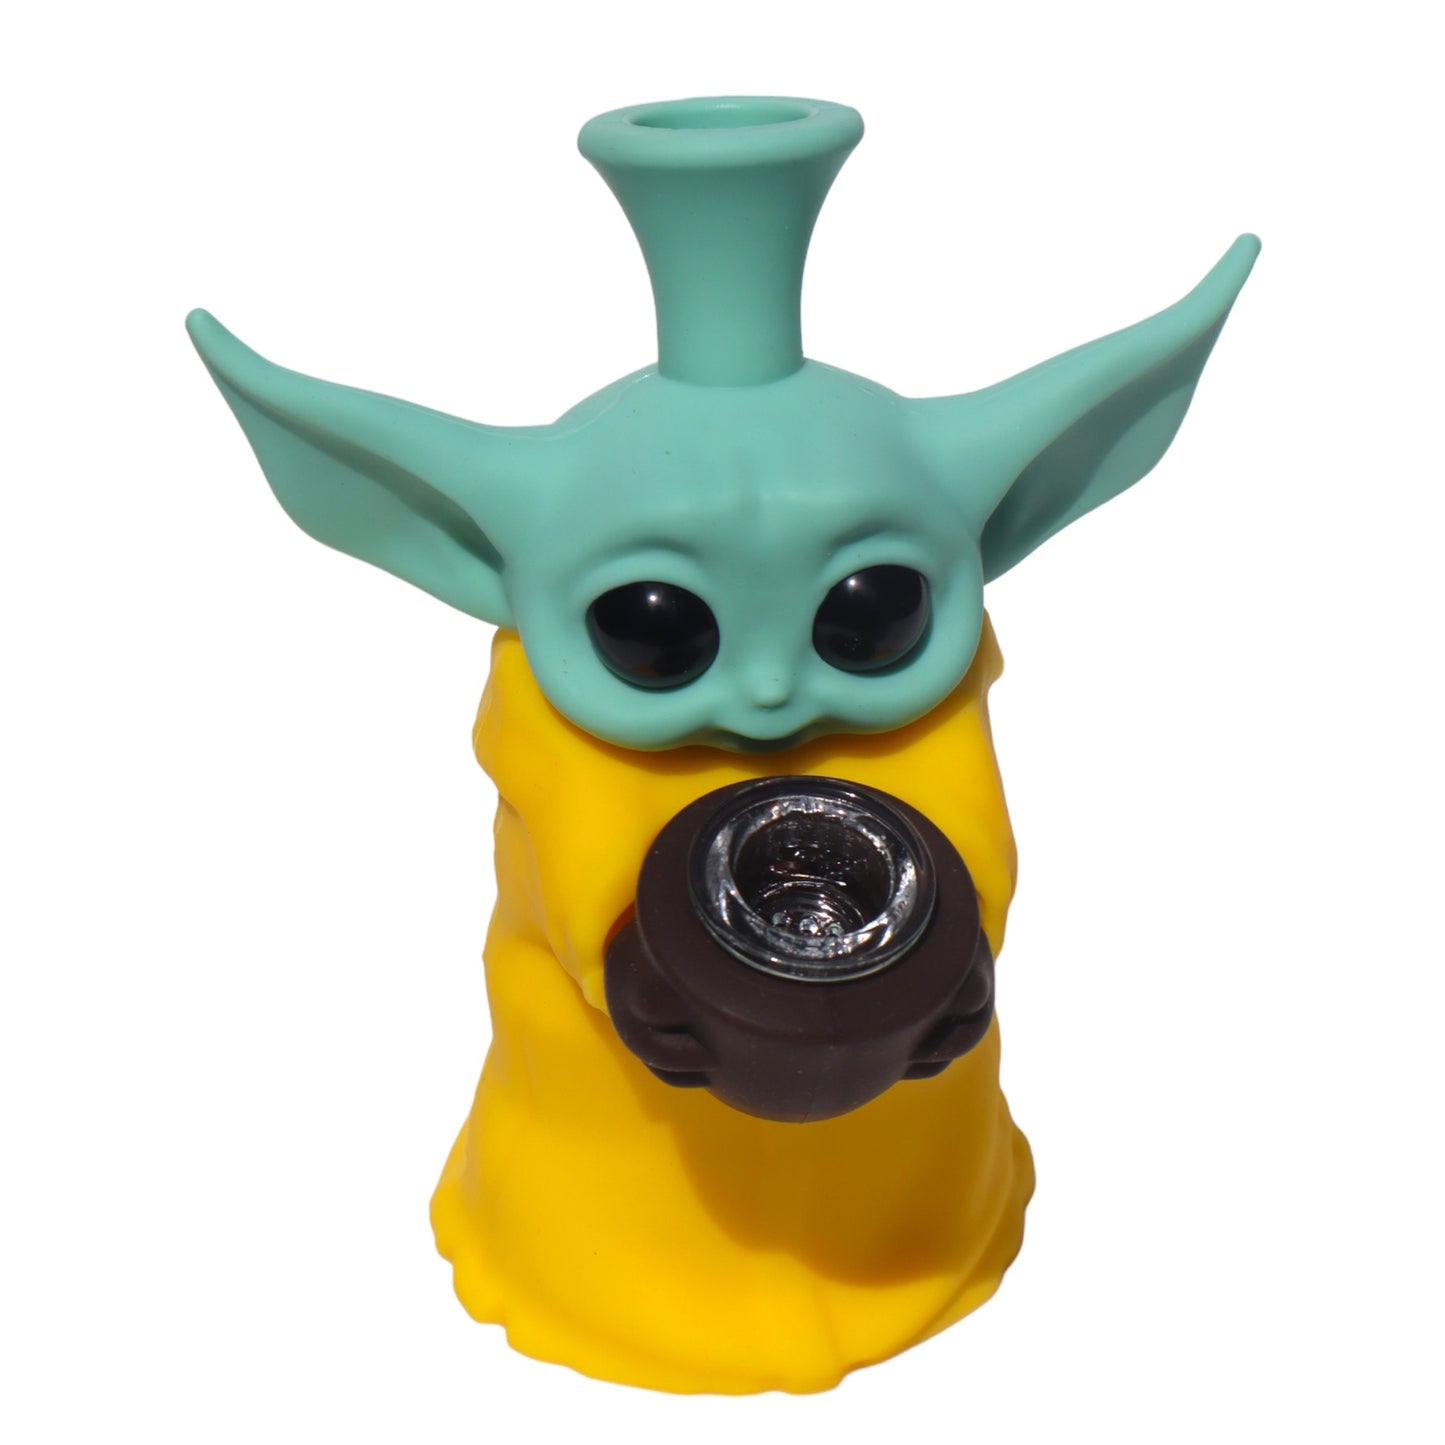 Star Wars Rebel Yoda Silicone Water Bong Pipe - Rebel Grogu " The Rebel" - Yellow